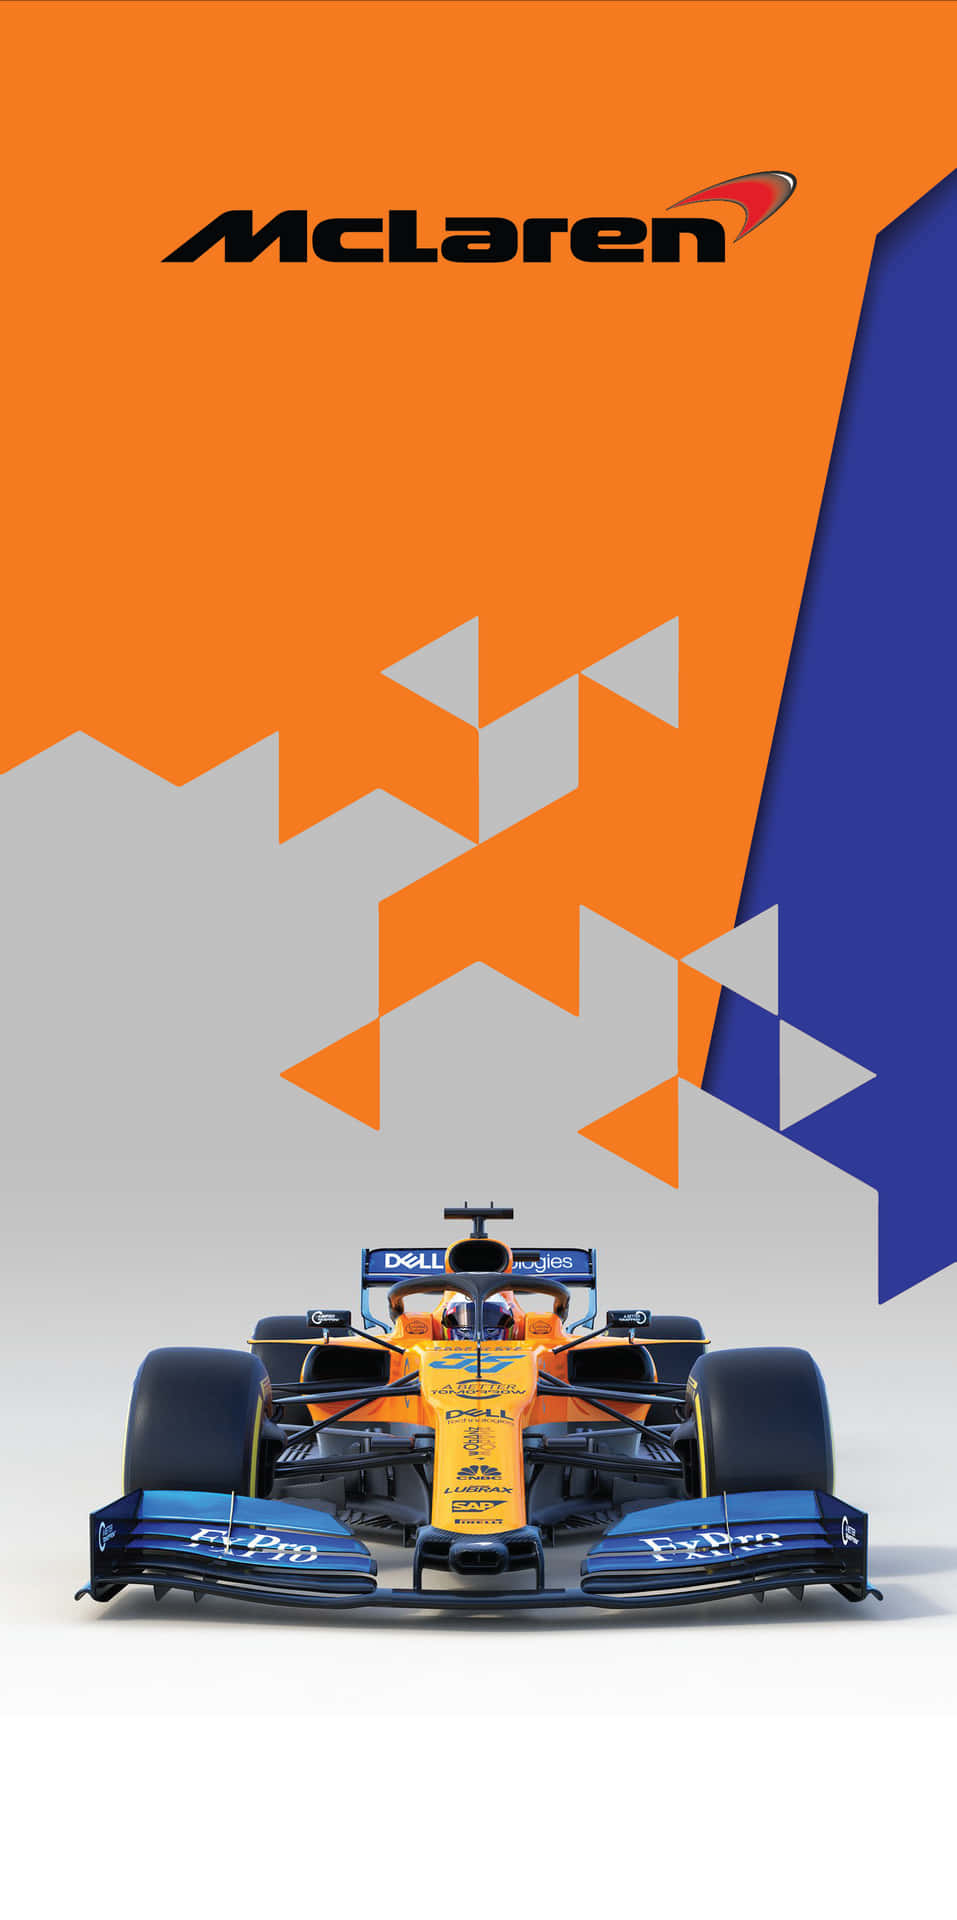 Image  McLaren Formula 1 racing car speeding on the track Wallpaper